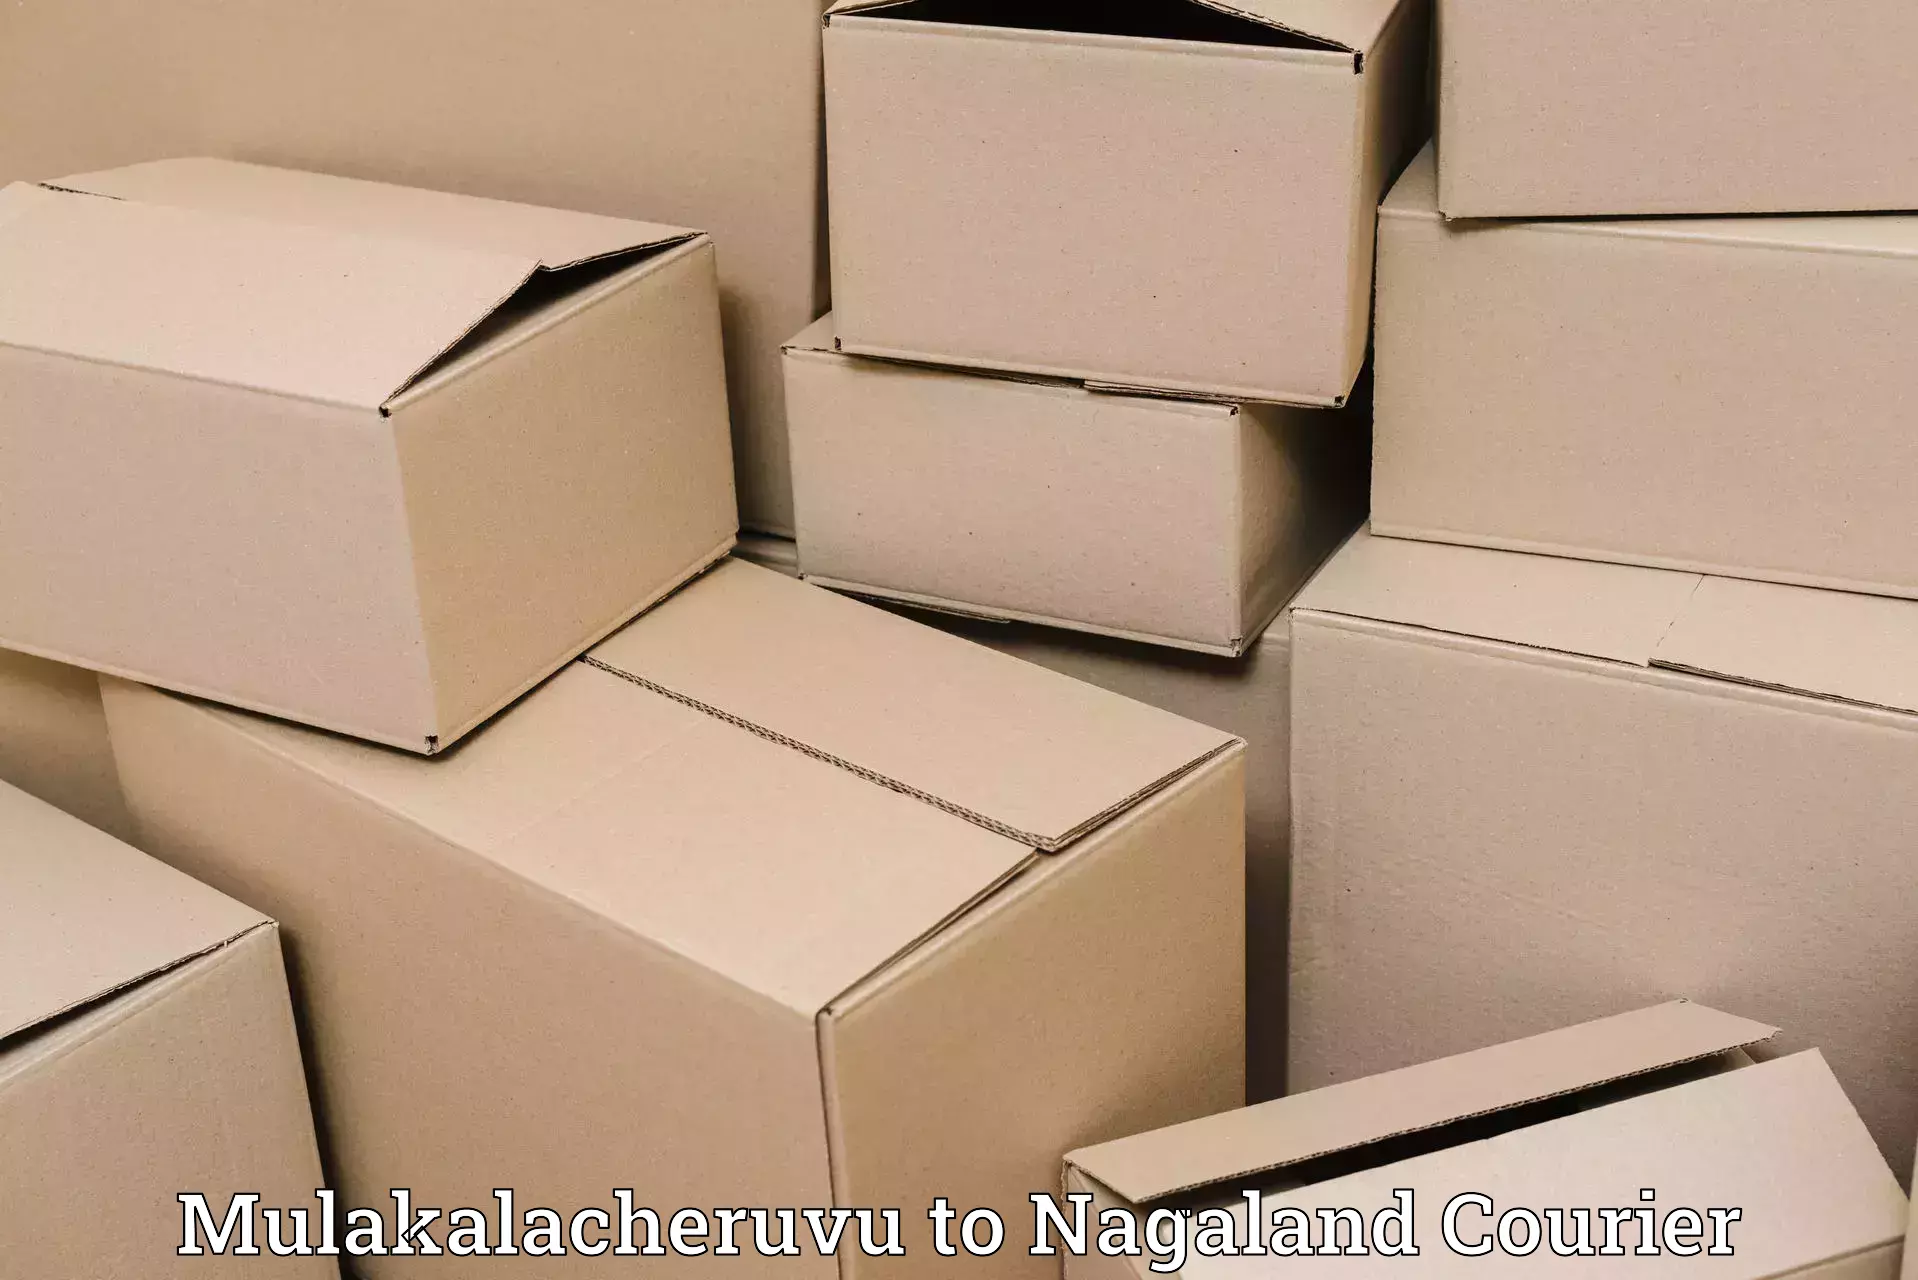 Digital courier platforms Mulakalacheruvu to NIT Nagaland